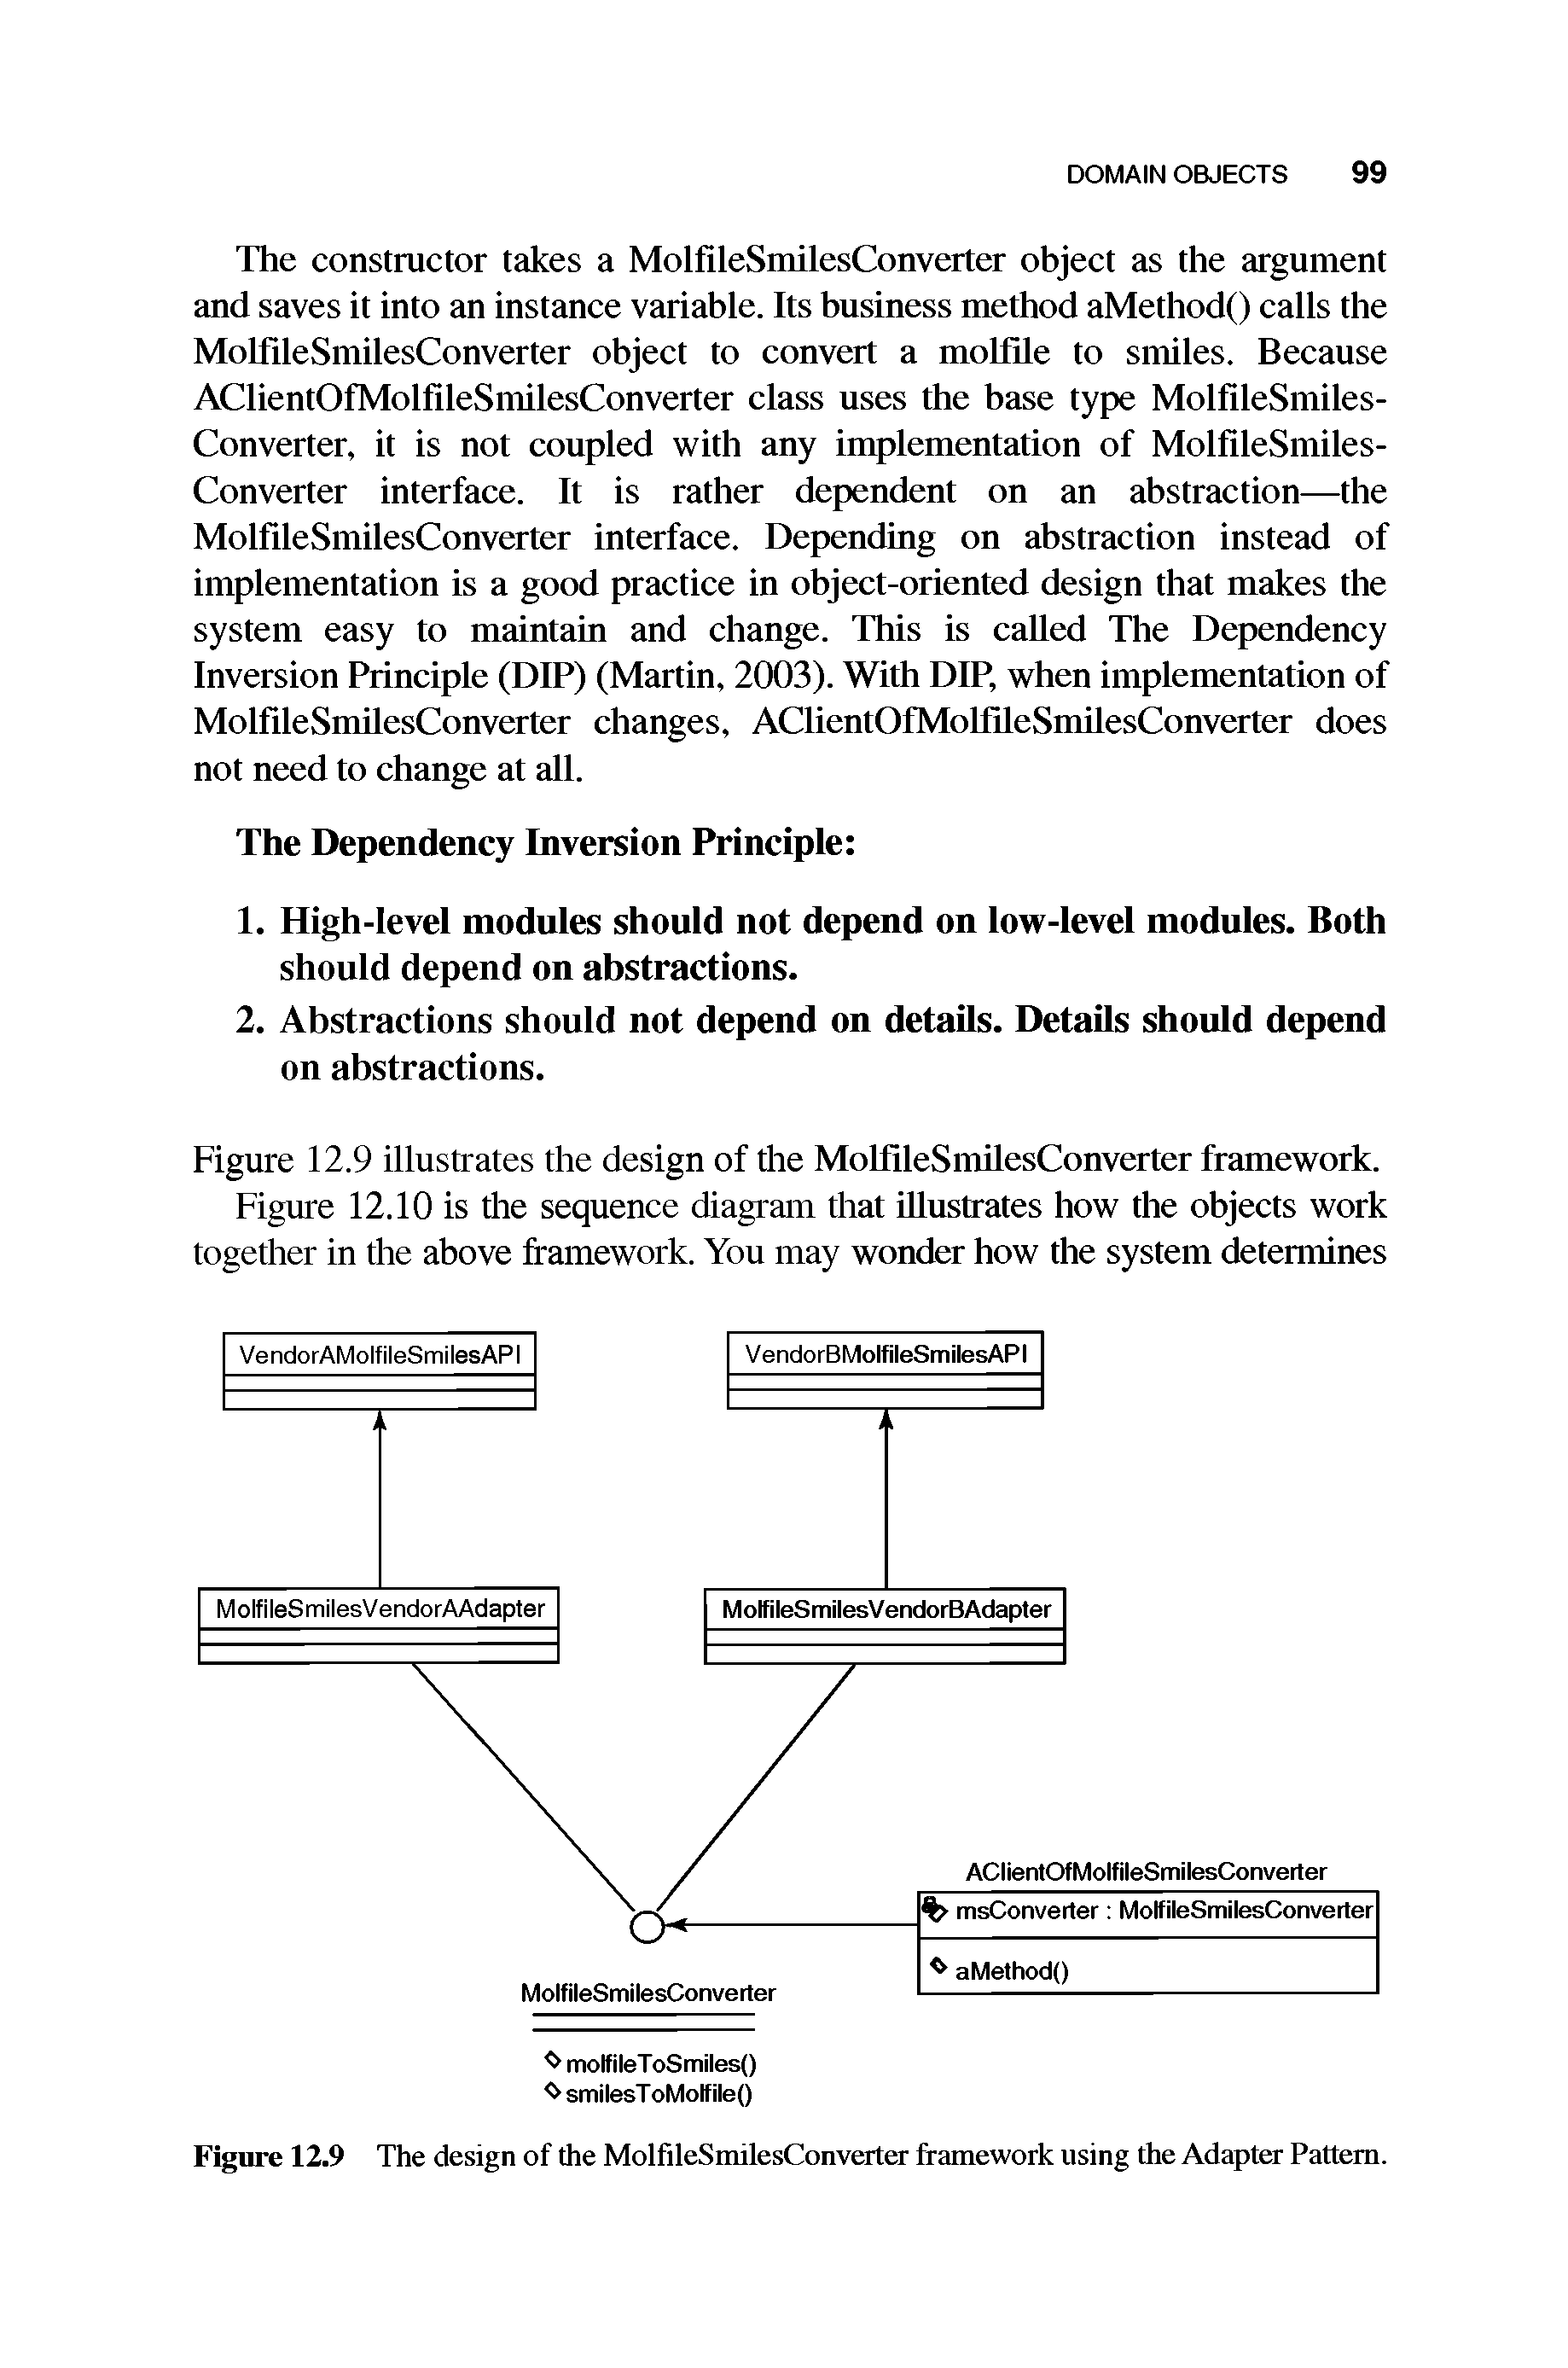 Figure 12.9 The design of the MolfileSmilesConverter framework using the Adapter Pattern.